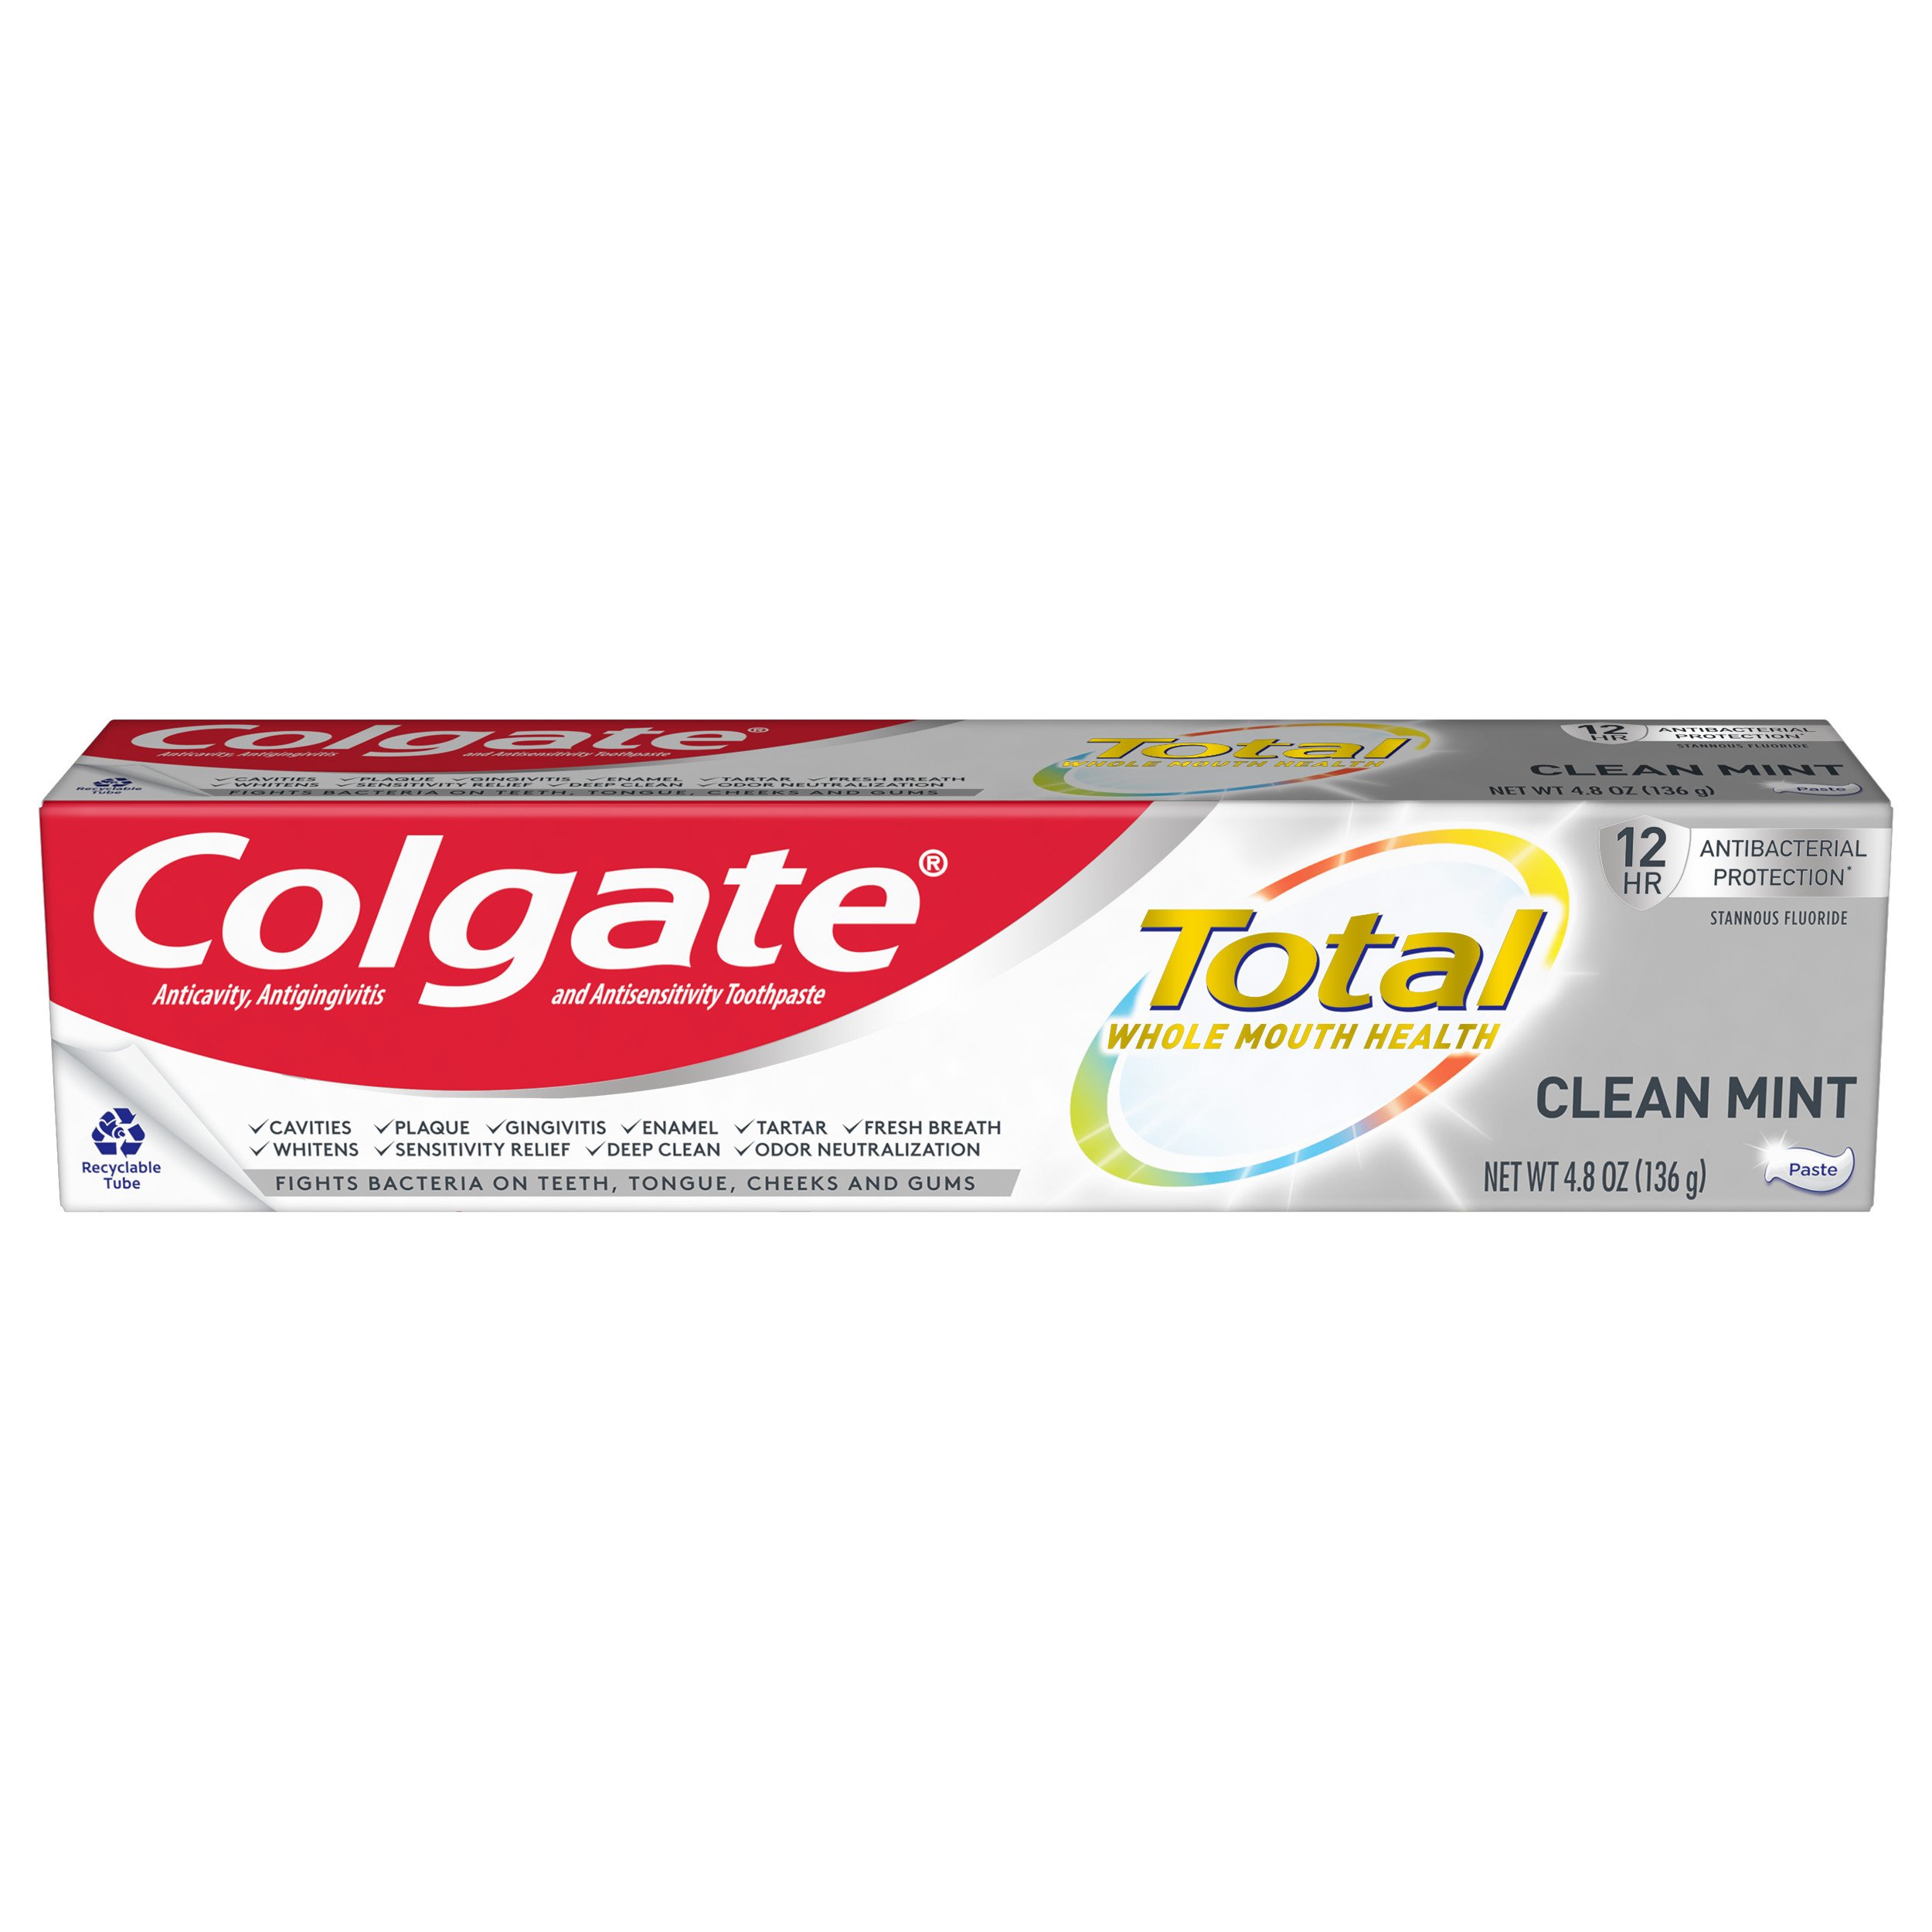 colgate toothpaste logo